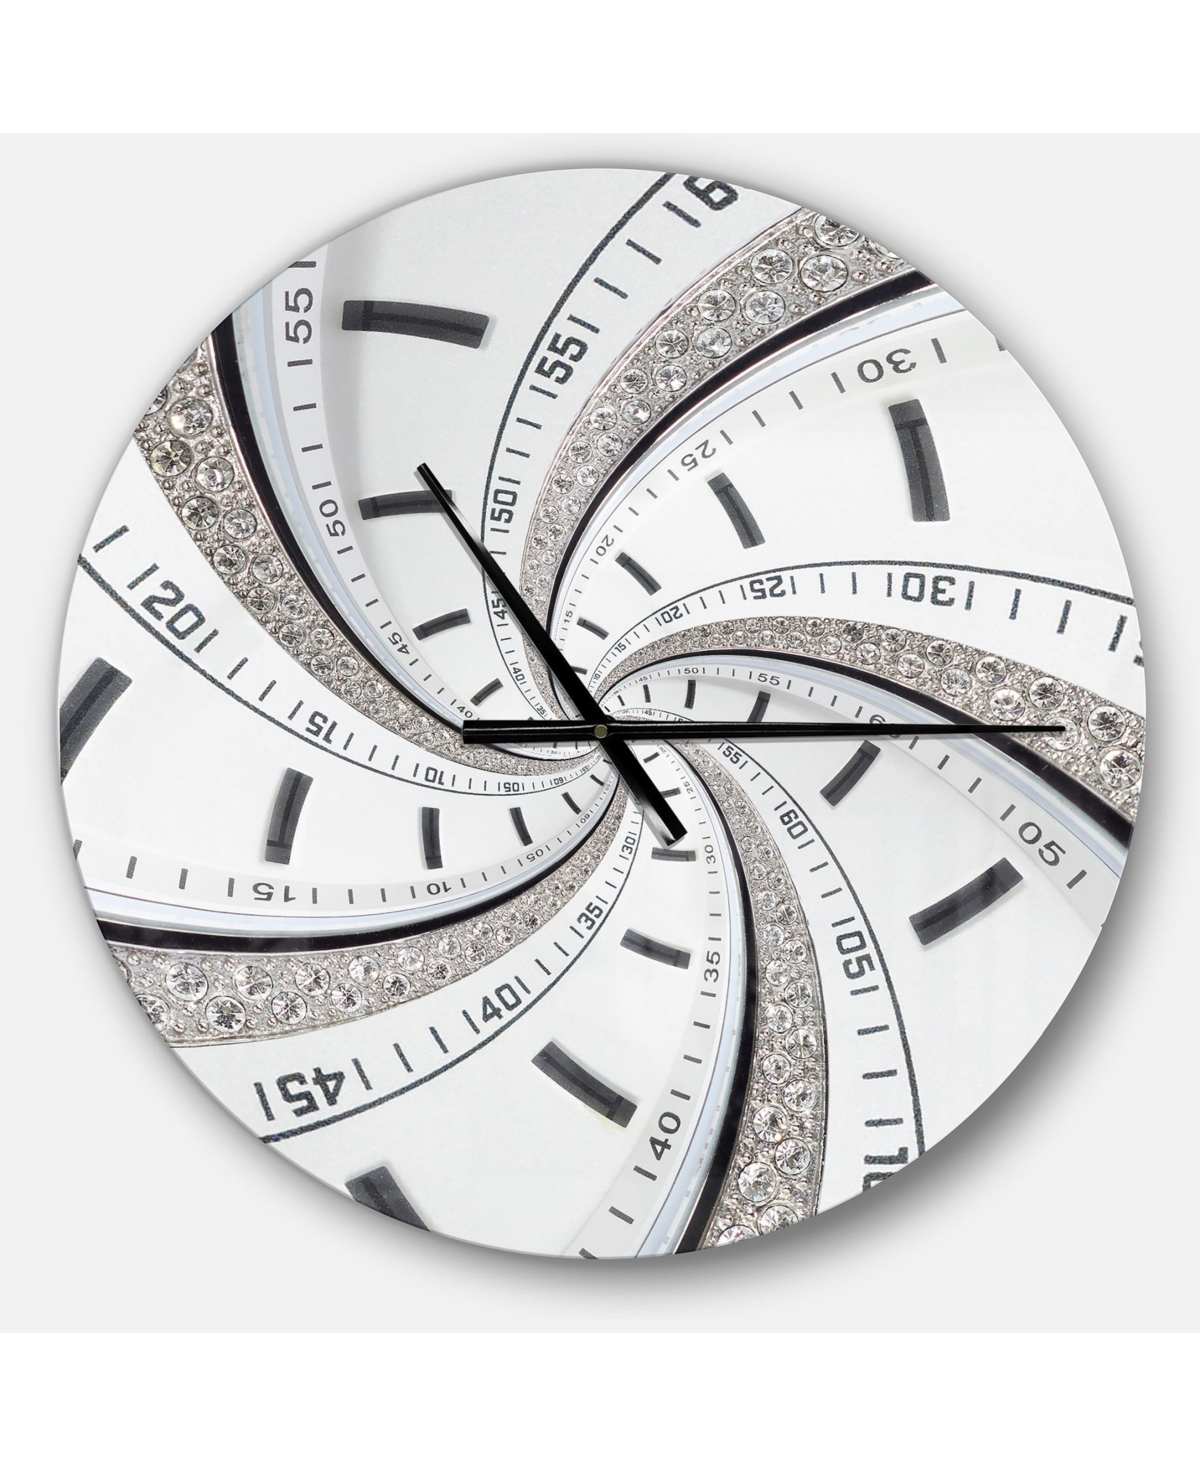 Designart Oversized Contemporary Round Metal Wall Clock